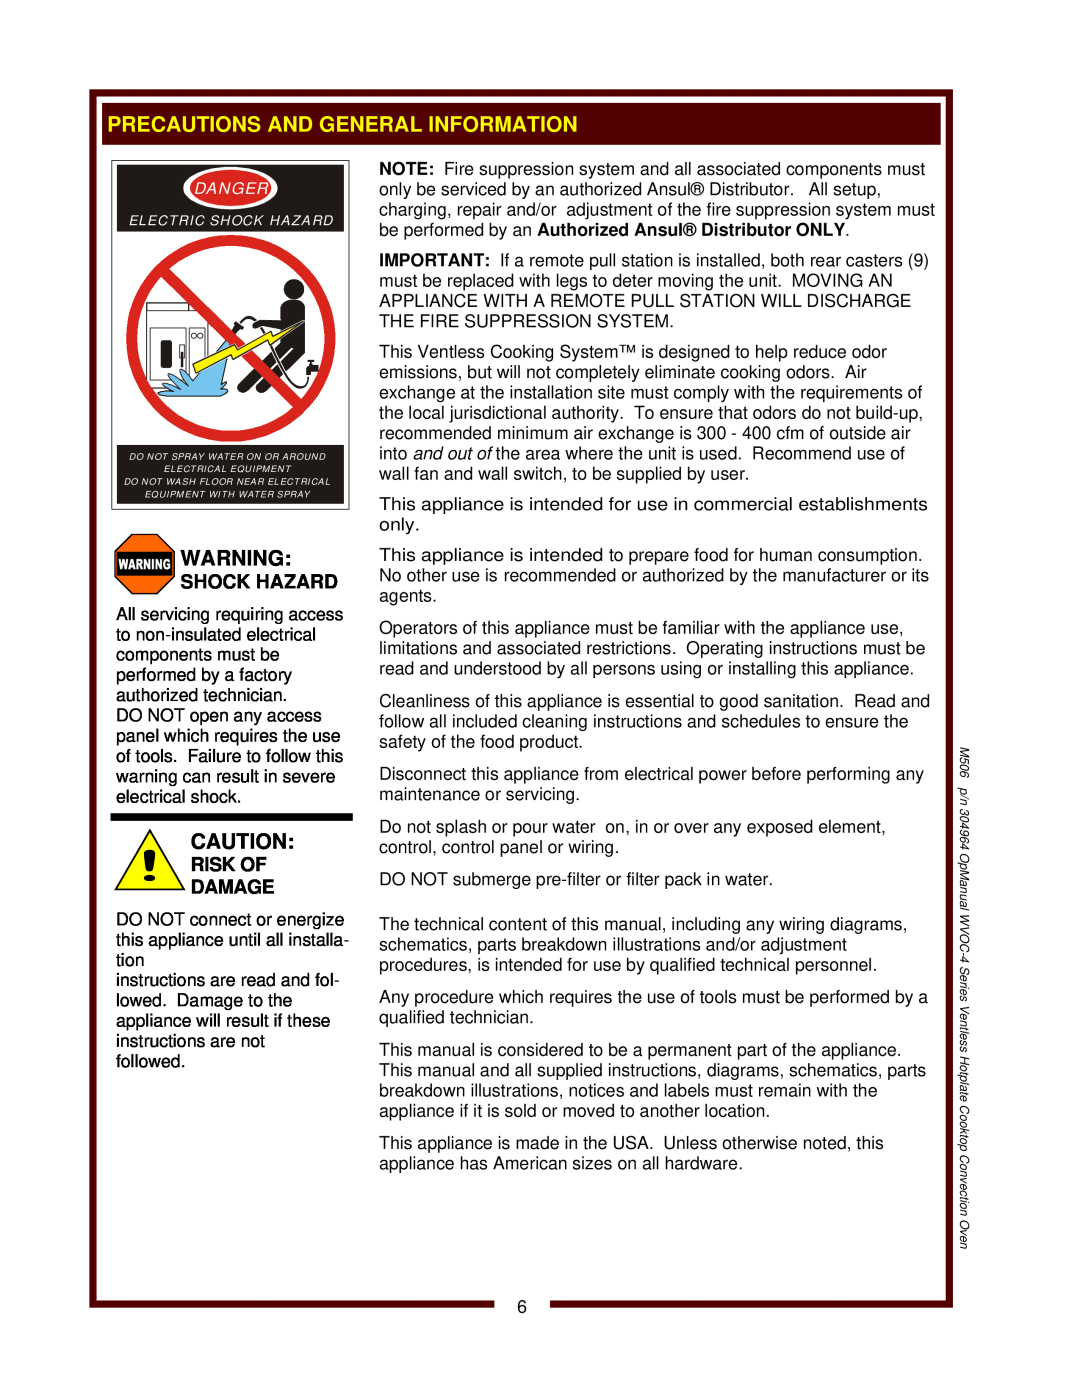 Wells WVOC-4HS operation manual Shock Hazard, Risk Of Damage 